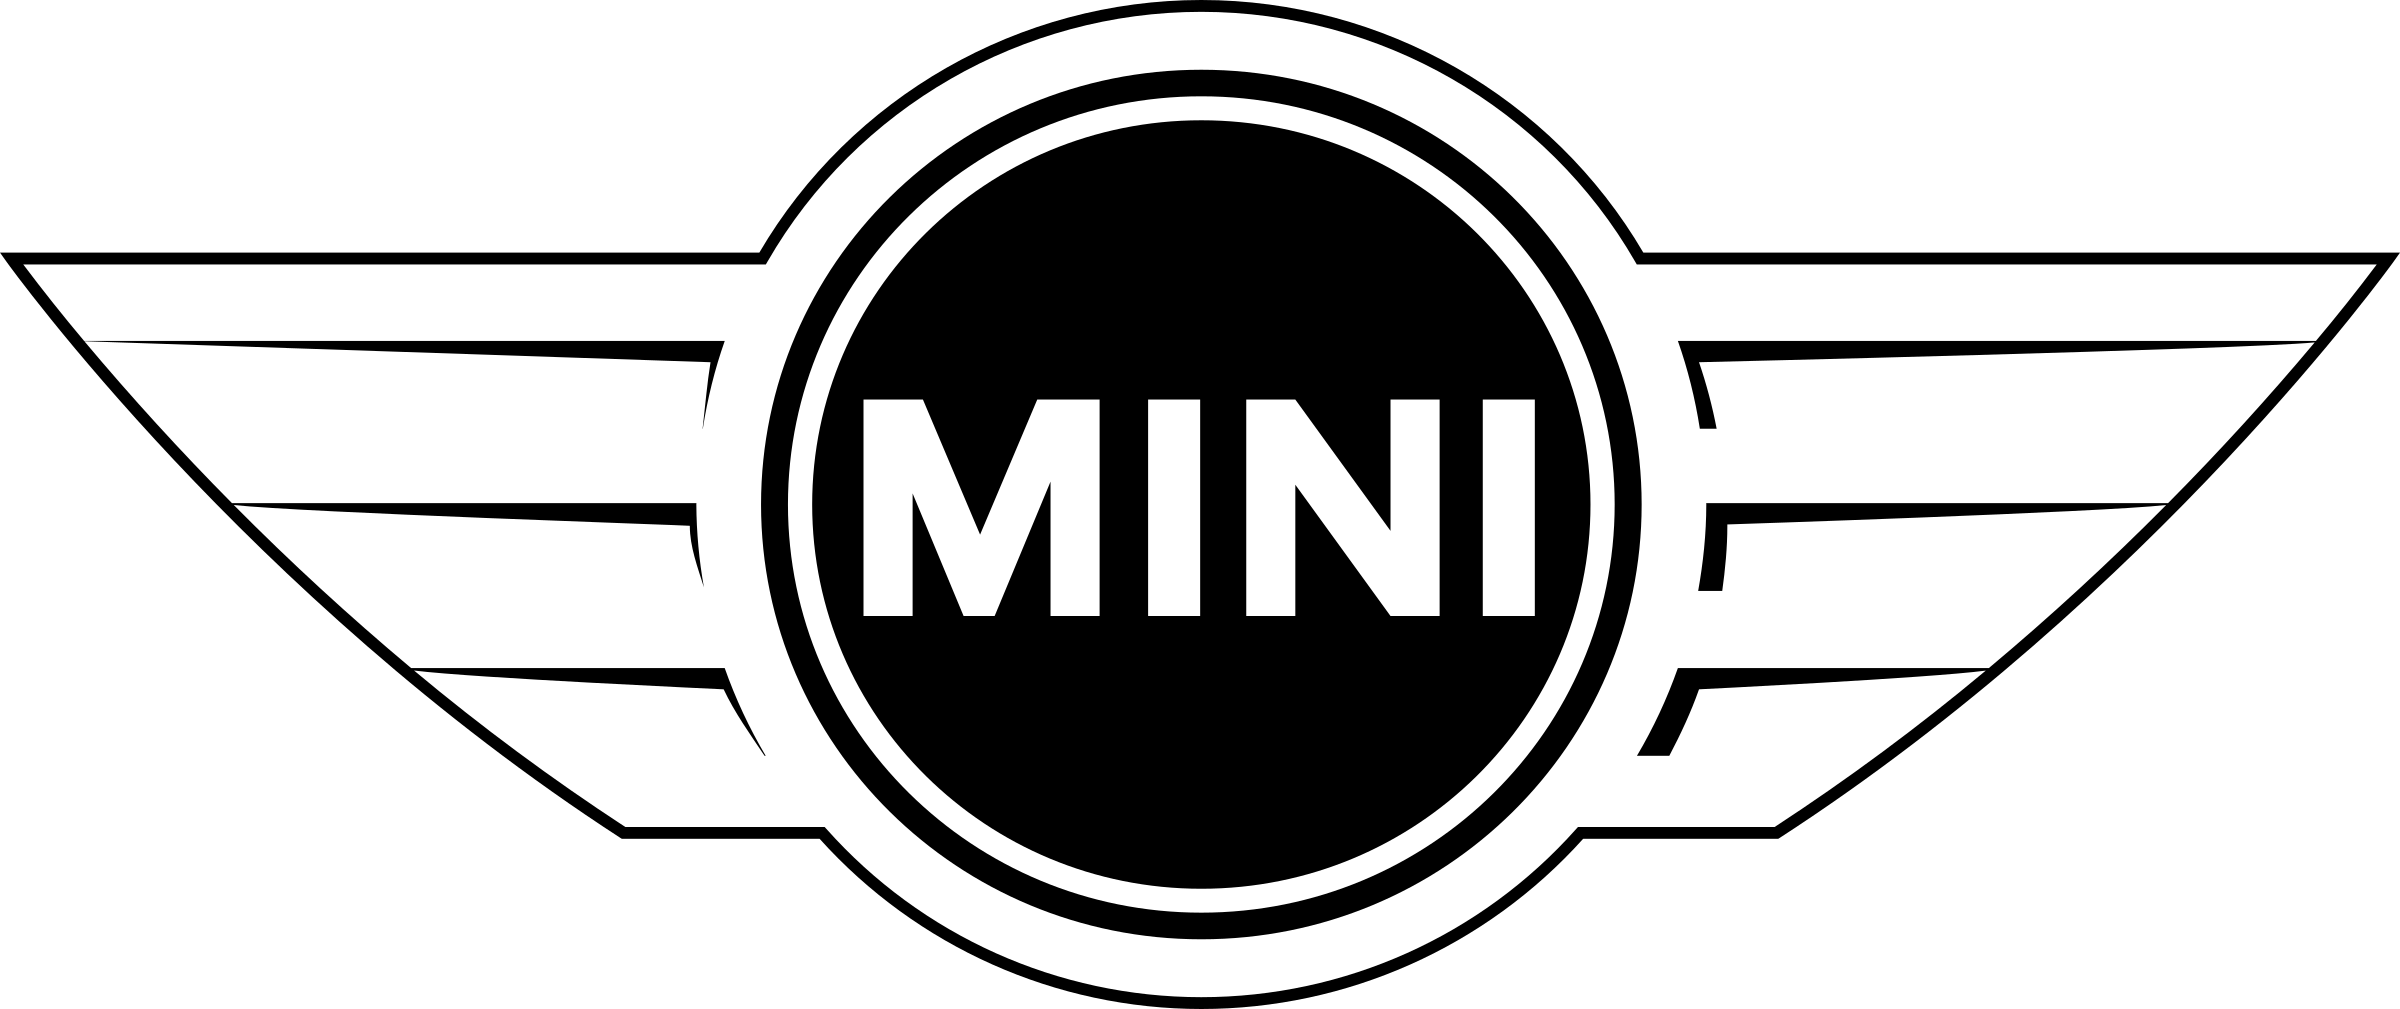 BMW Mini Logo - BMW Mini Logo PNG Transparent & SVG Vector